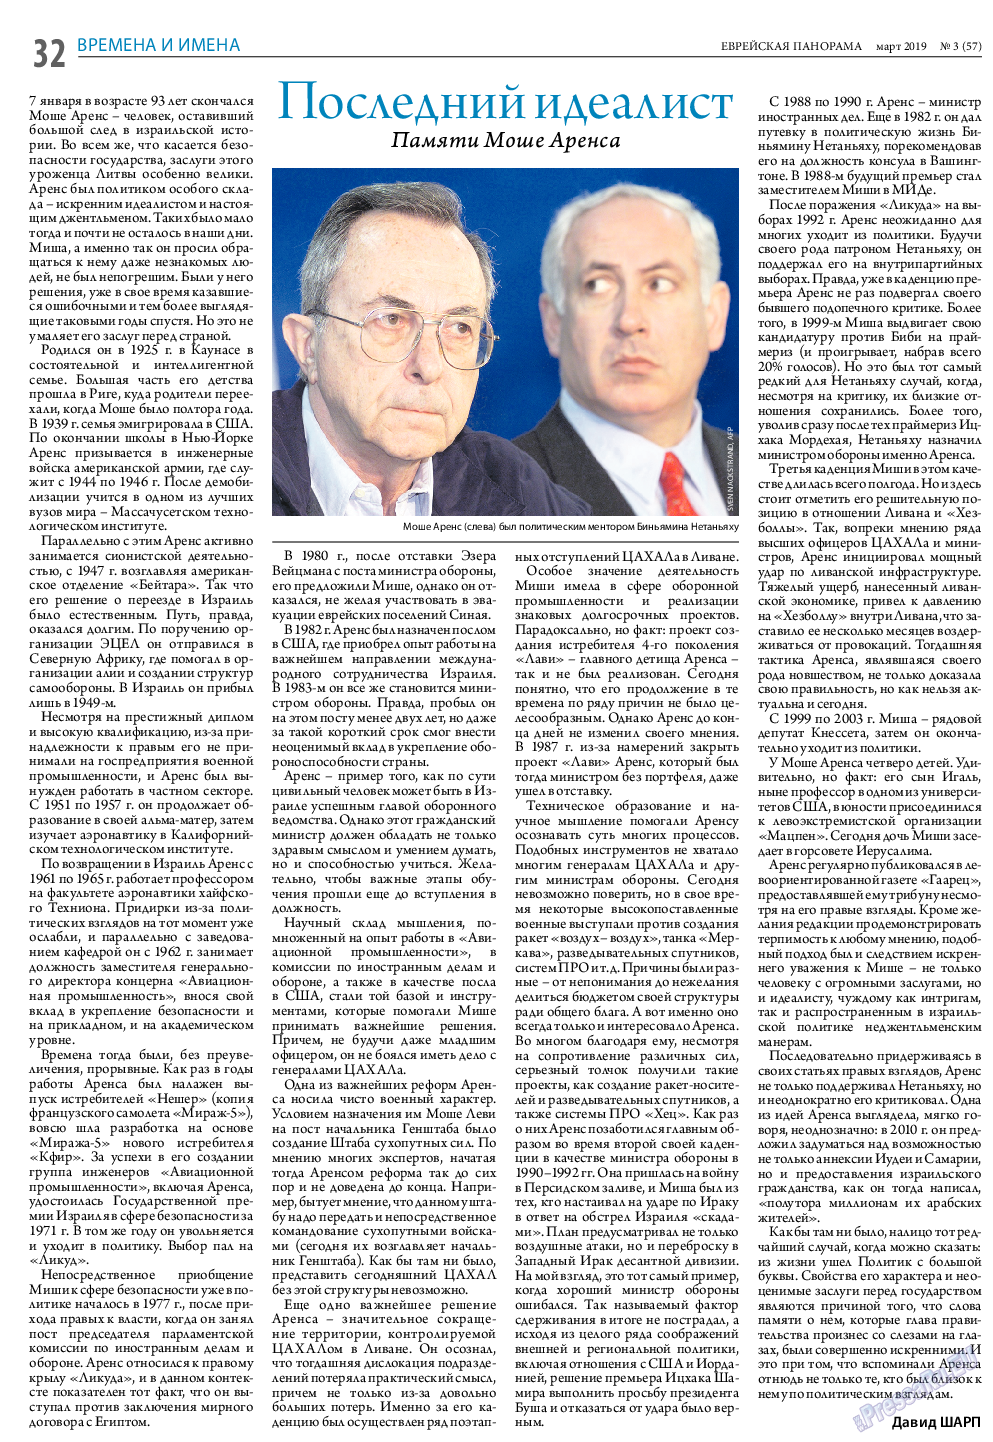 Еврейская панорама, газета. 2019 №3 стр.32